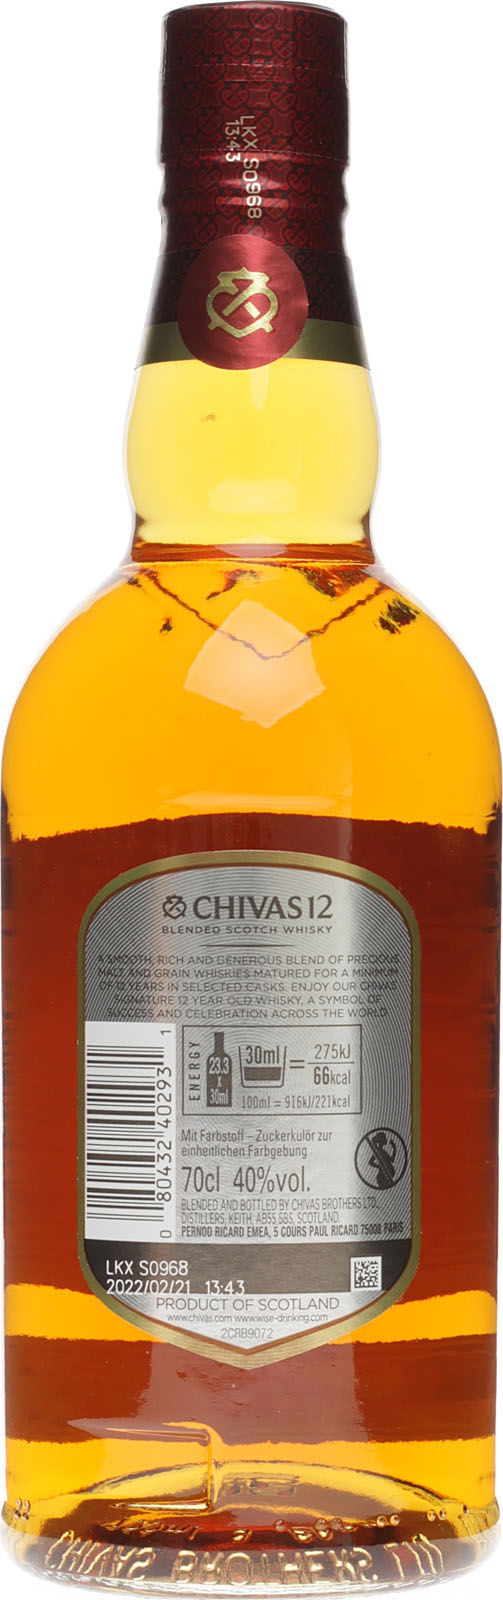 m 12 Chivas Jahre Premium Scotch Regal - Blended Whisky